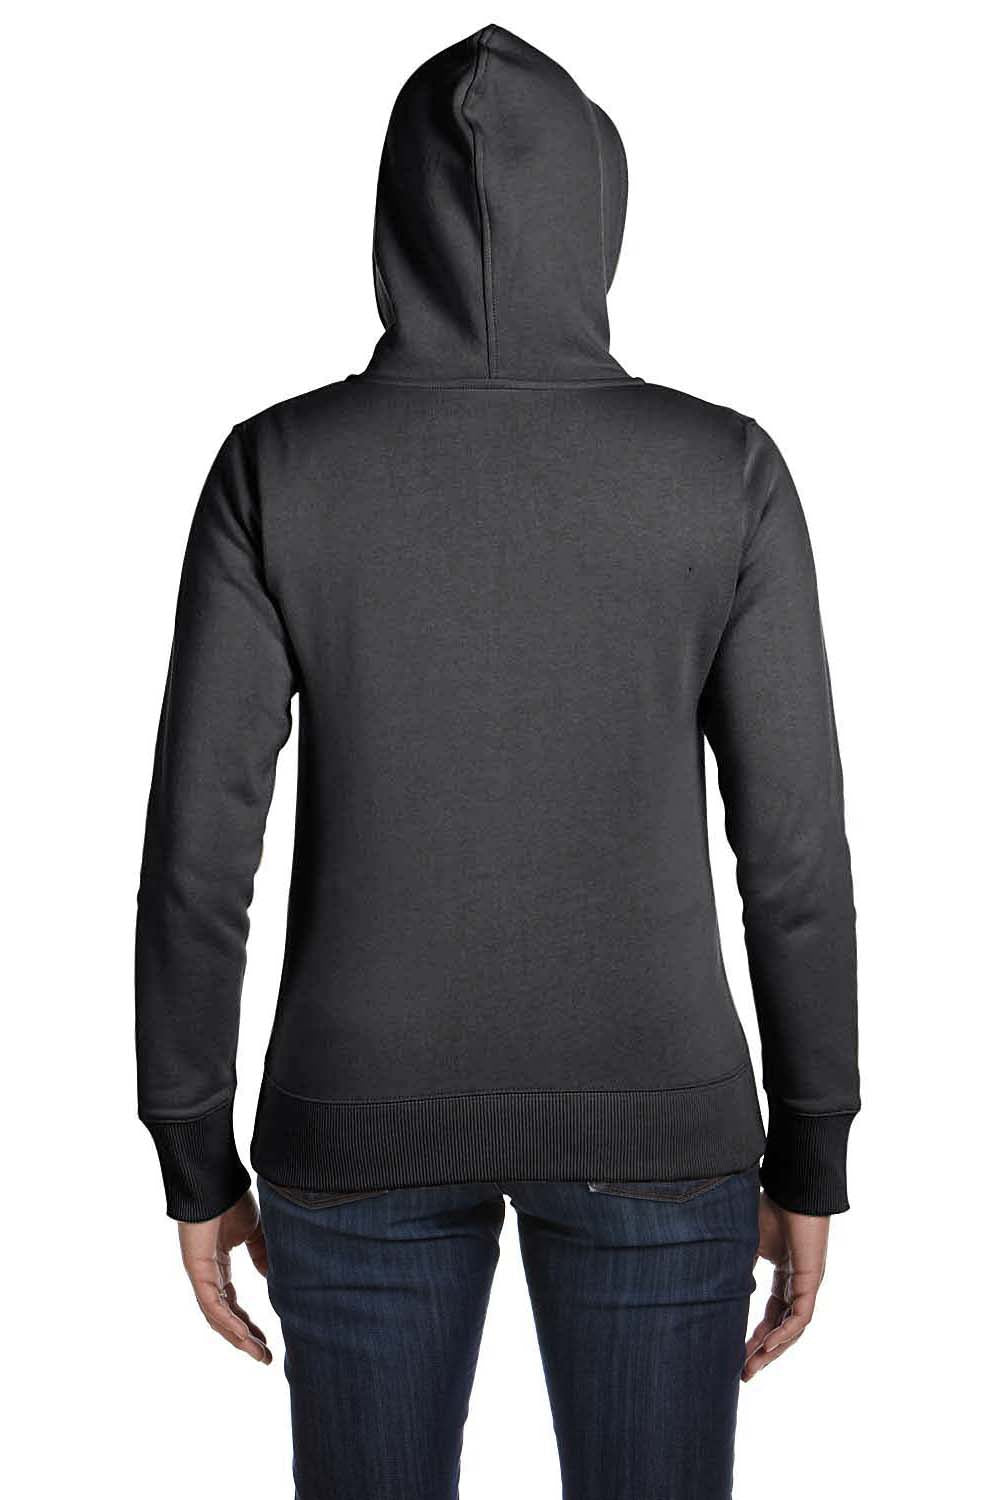 Econscious EC4501 Womens Full Zip Hooded Sweatshirt Hoodie Charcoal Grey Back